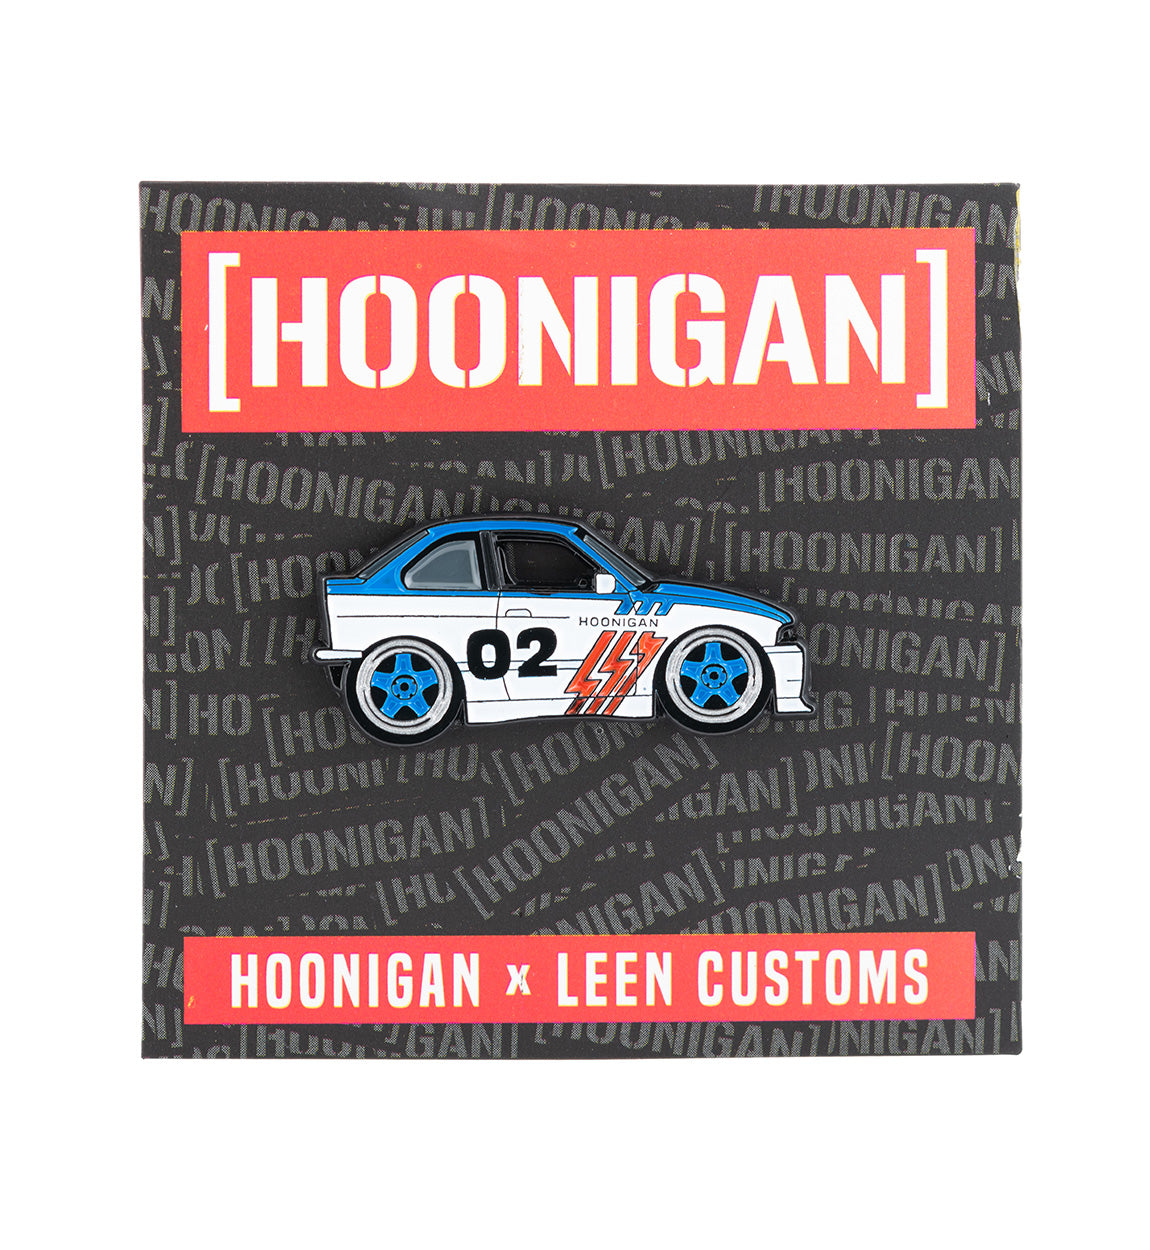 Hoonigan x Leen Customs Limited SHITCAR Collectible Pin